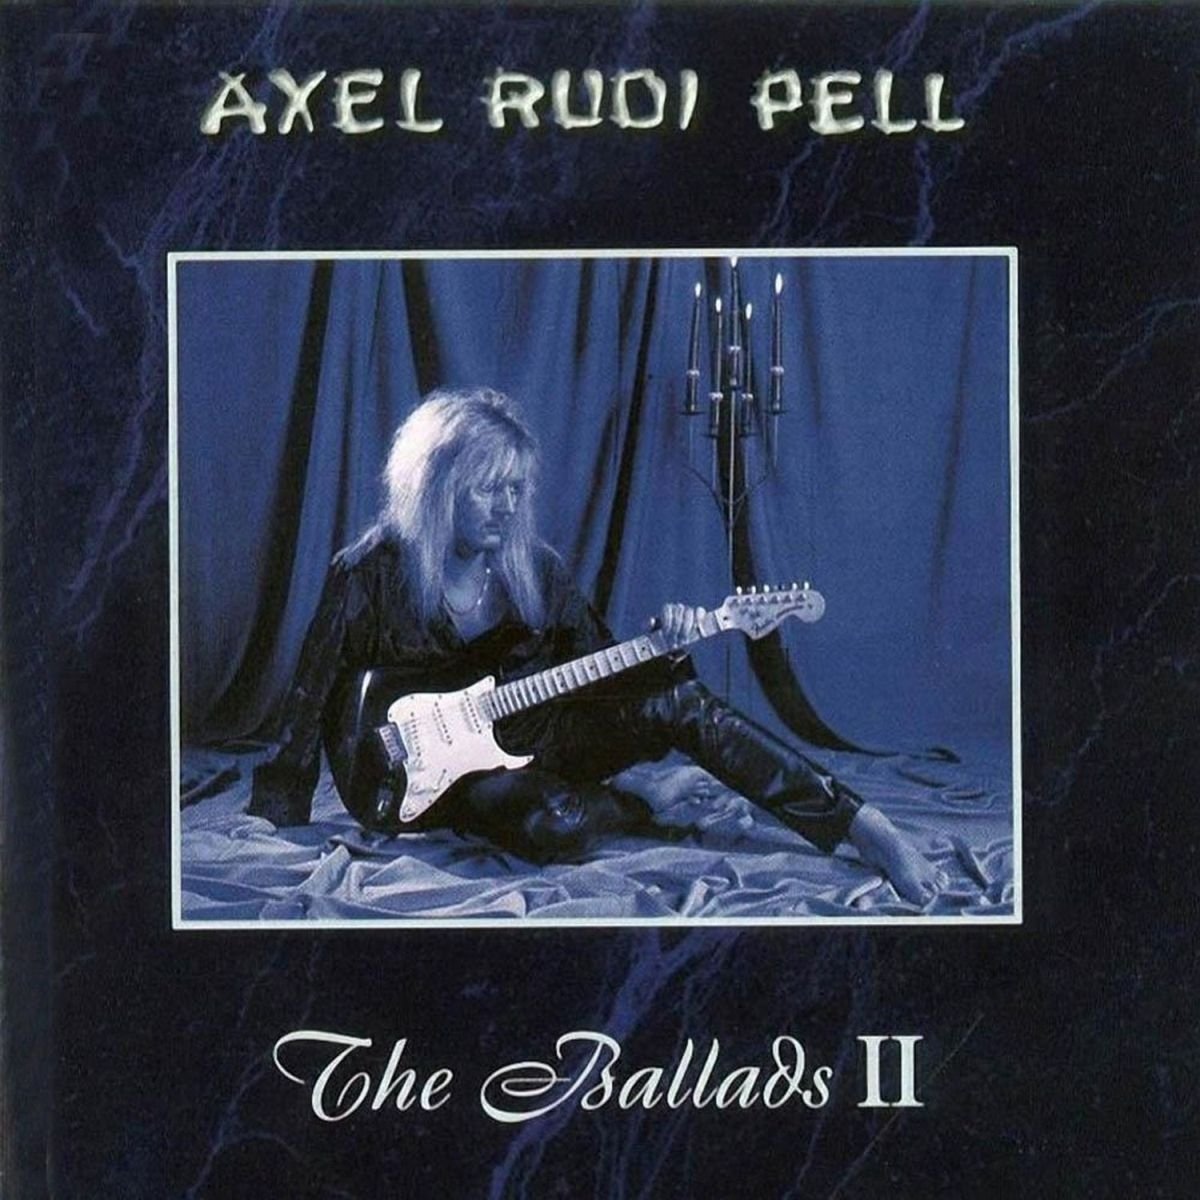 Axel Rudi Pell - The Ballads Ii vinyl cover